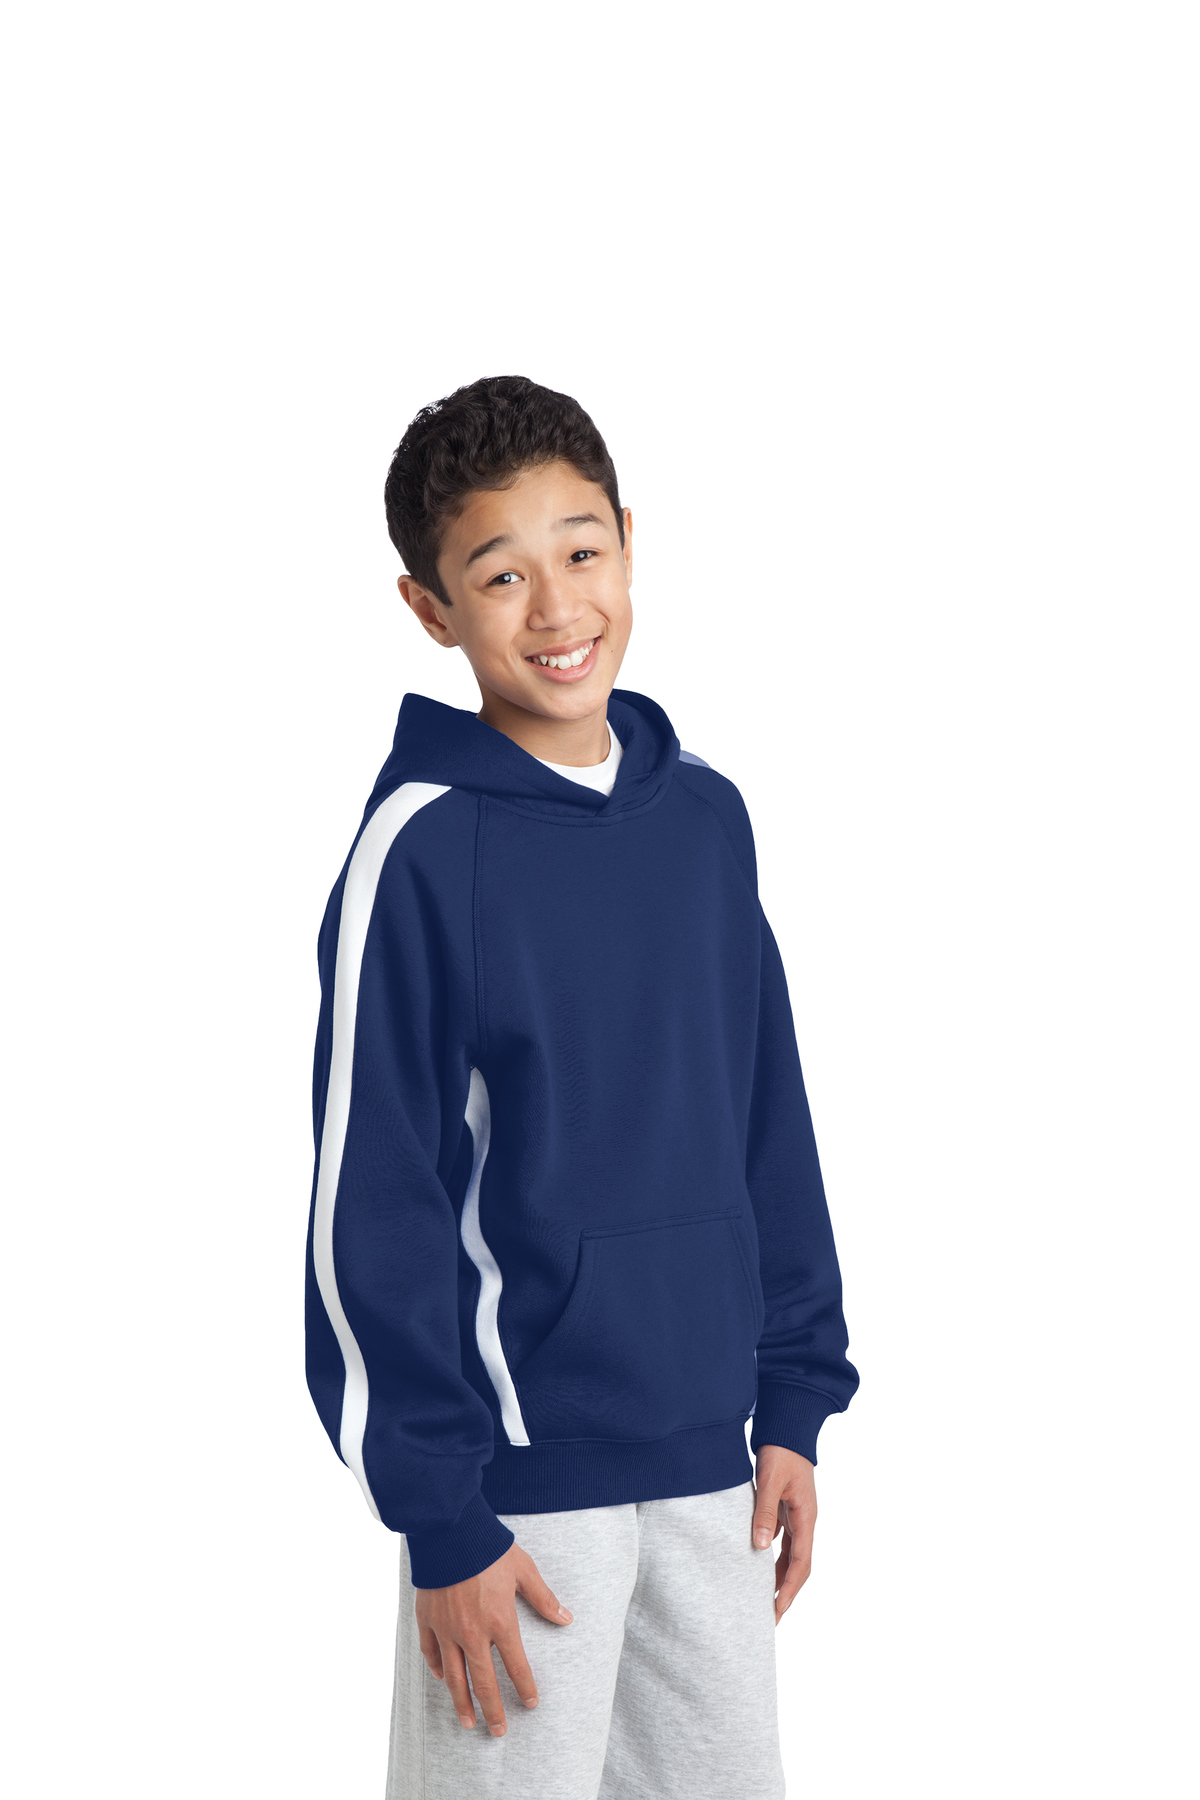 YST265 Sport-Tek® Youth Sleeve Stripe Pullover Hooded Sweatshirt 